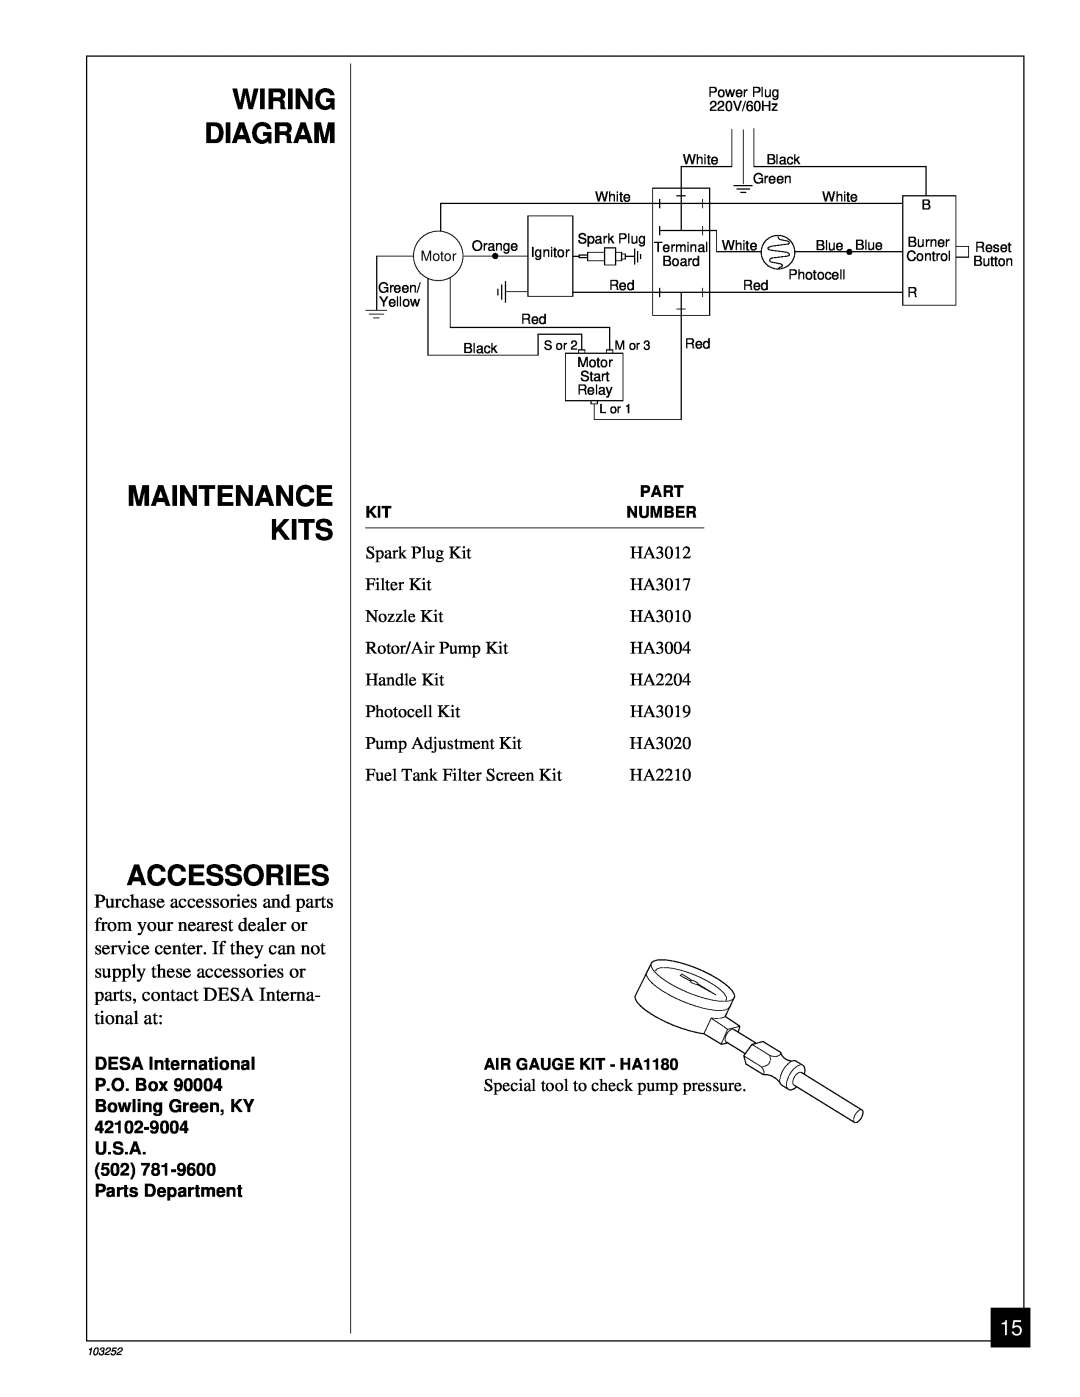 Desa RK150 owner manual Wiring Diagram Maintenance Kits Accessories, 502781-9600Parts Department 